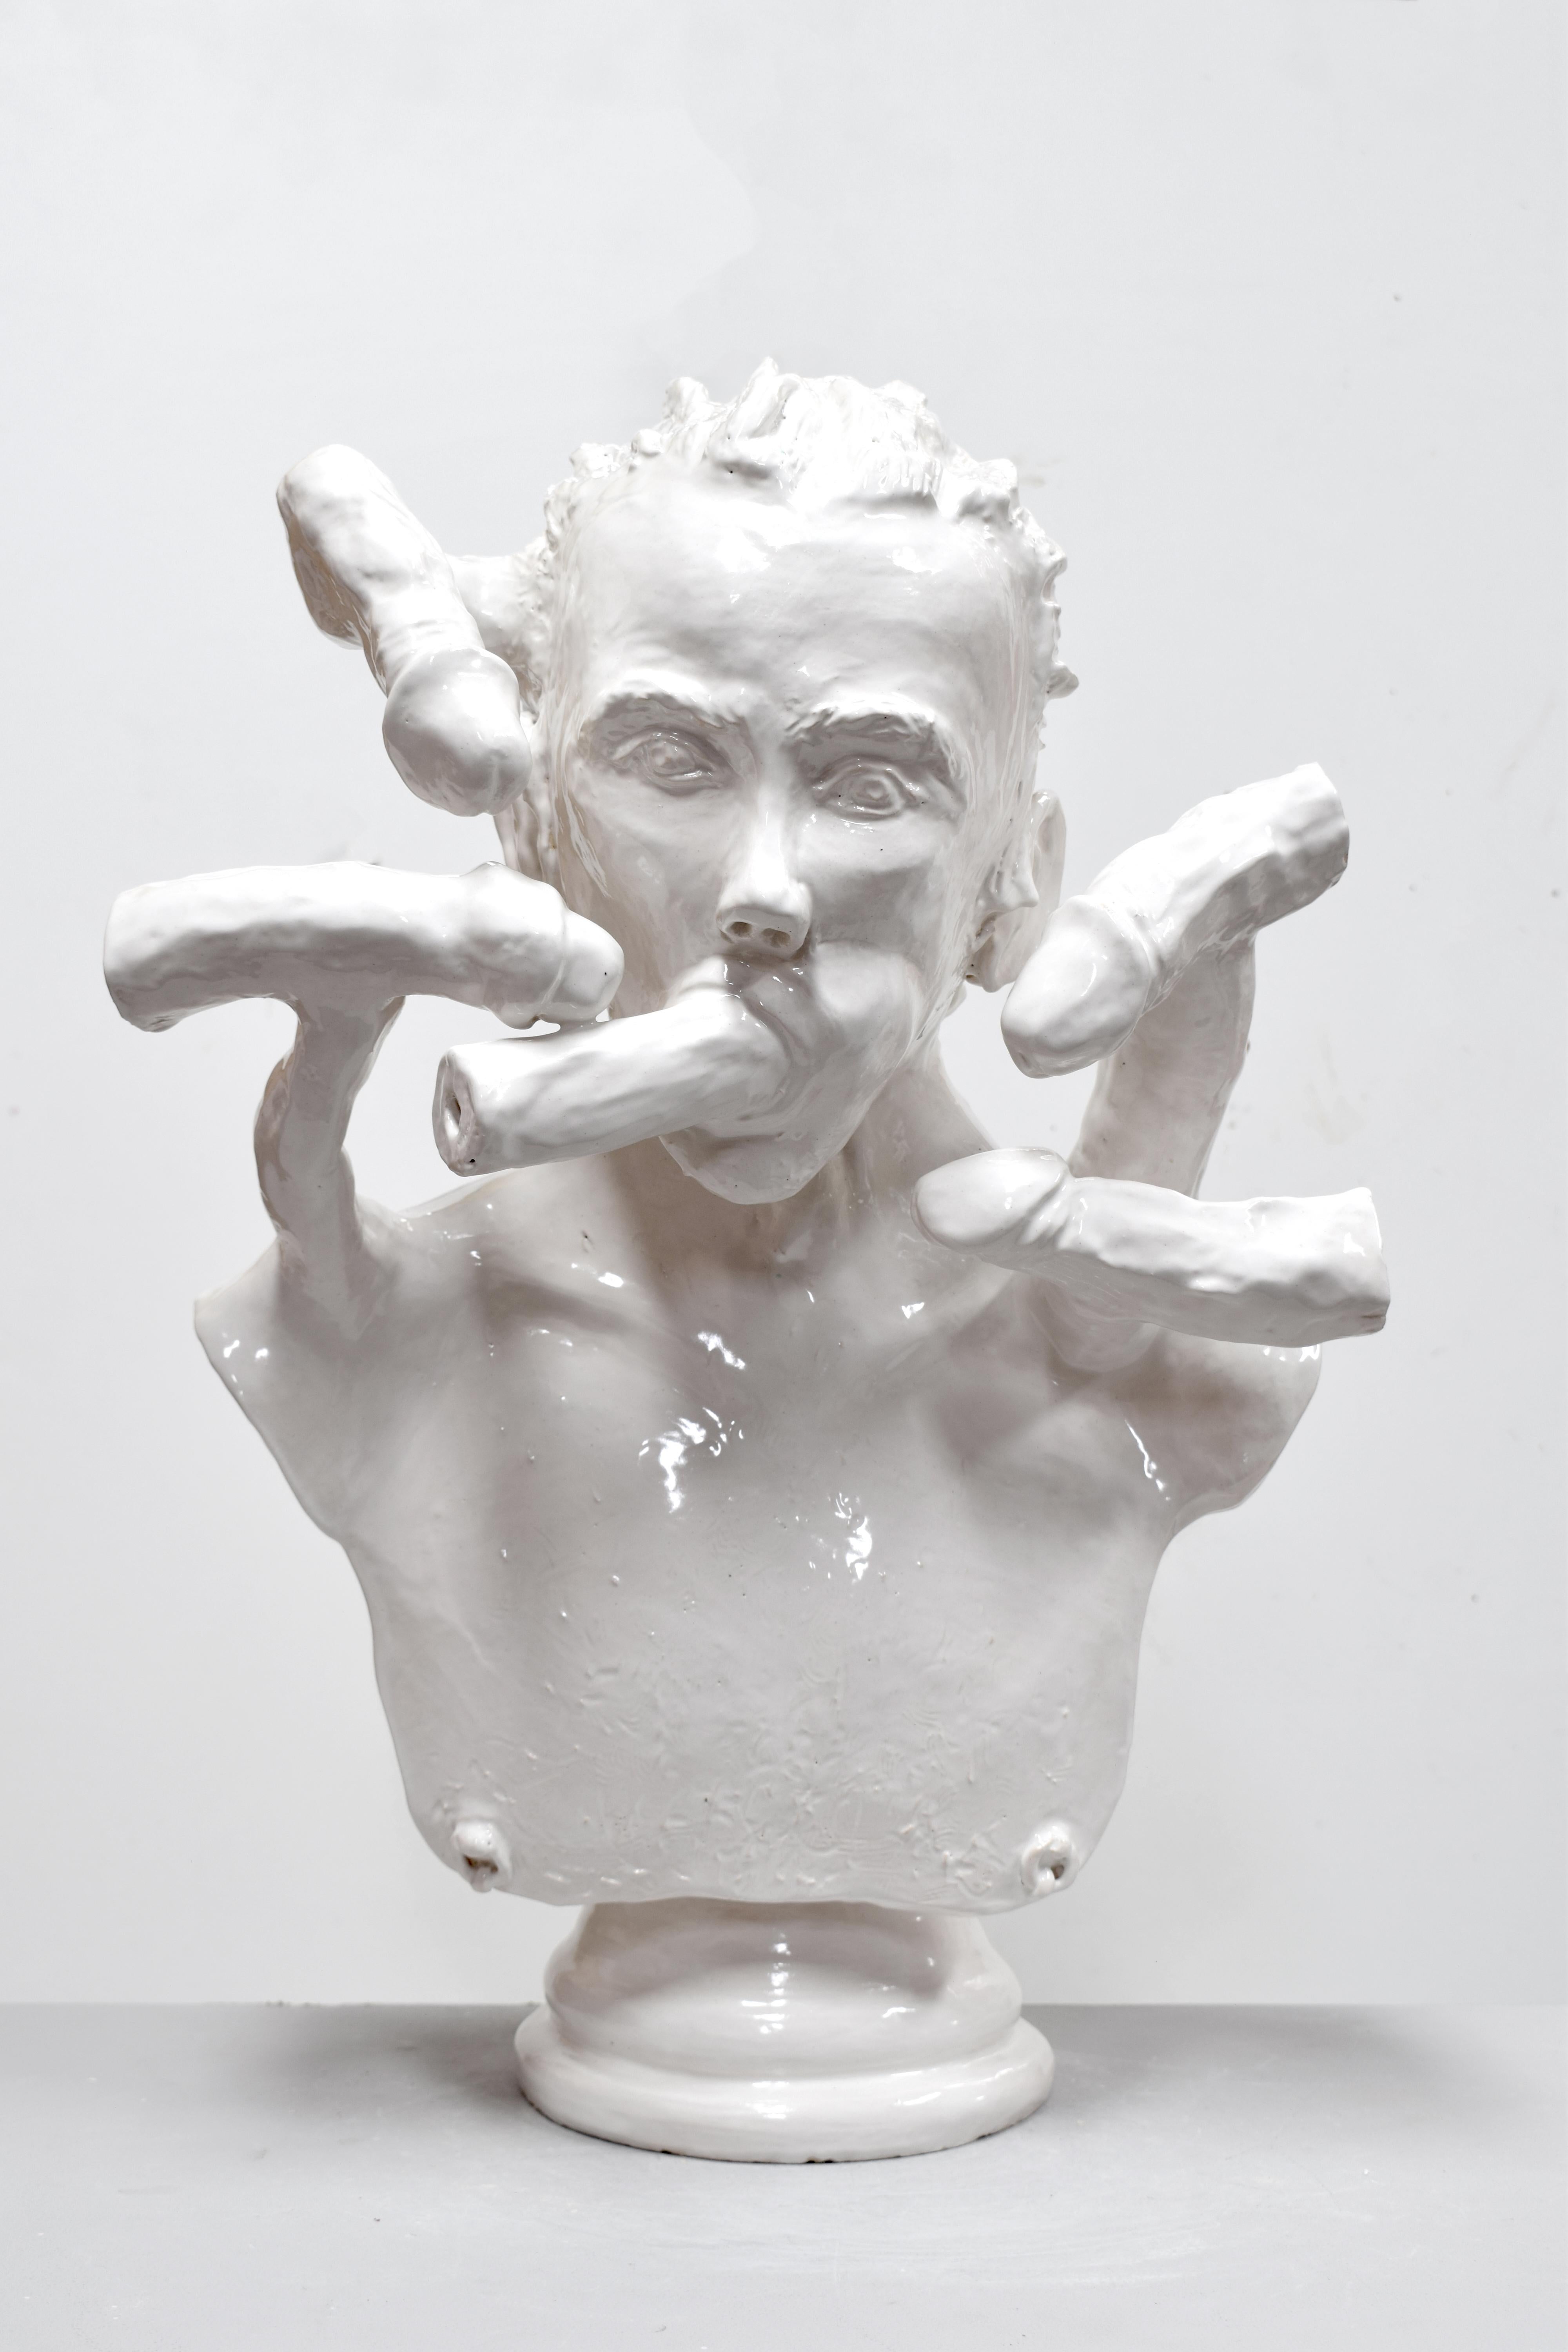 Chris Rijk Figurative Sculpture – Selbstporträt umgeben von Weibern